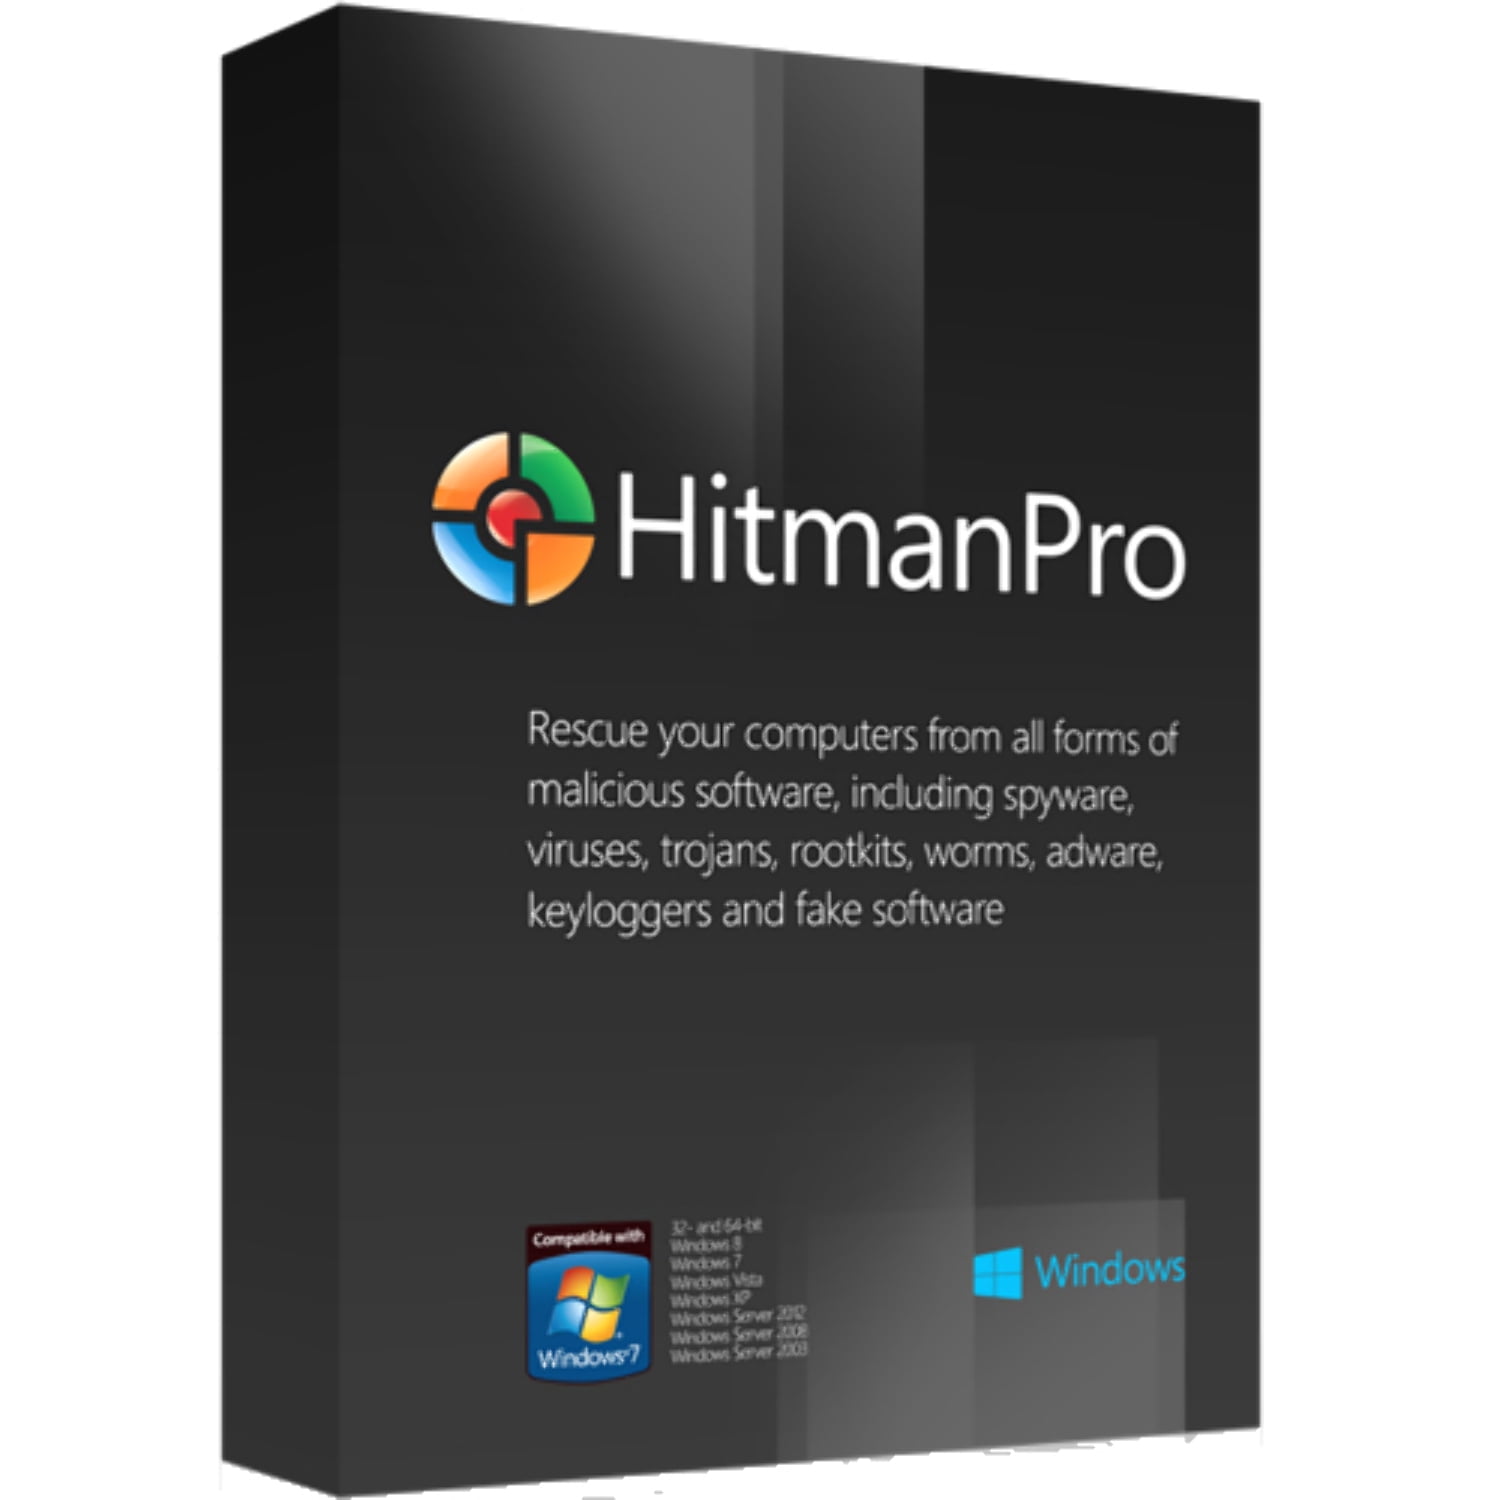 Антивирус hitman pro. Hitman Pro. Hitman Pro антивирус. Код активации Hitman Pro 3.8.30. HITMANPRO антишпионские программы.